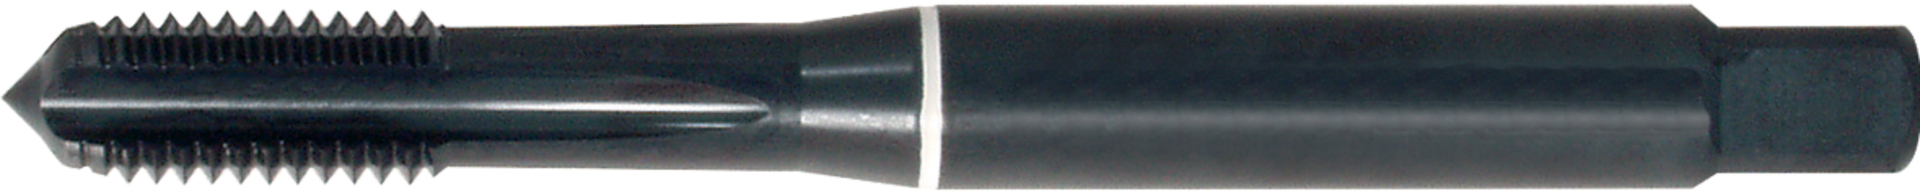 Maschinengewindebohrer DIN 371 - C HSSE M 4,0 GG FORMAT